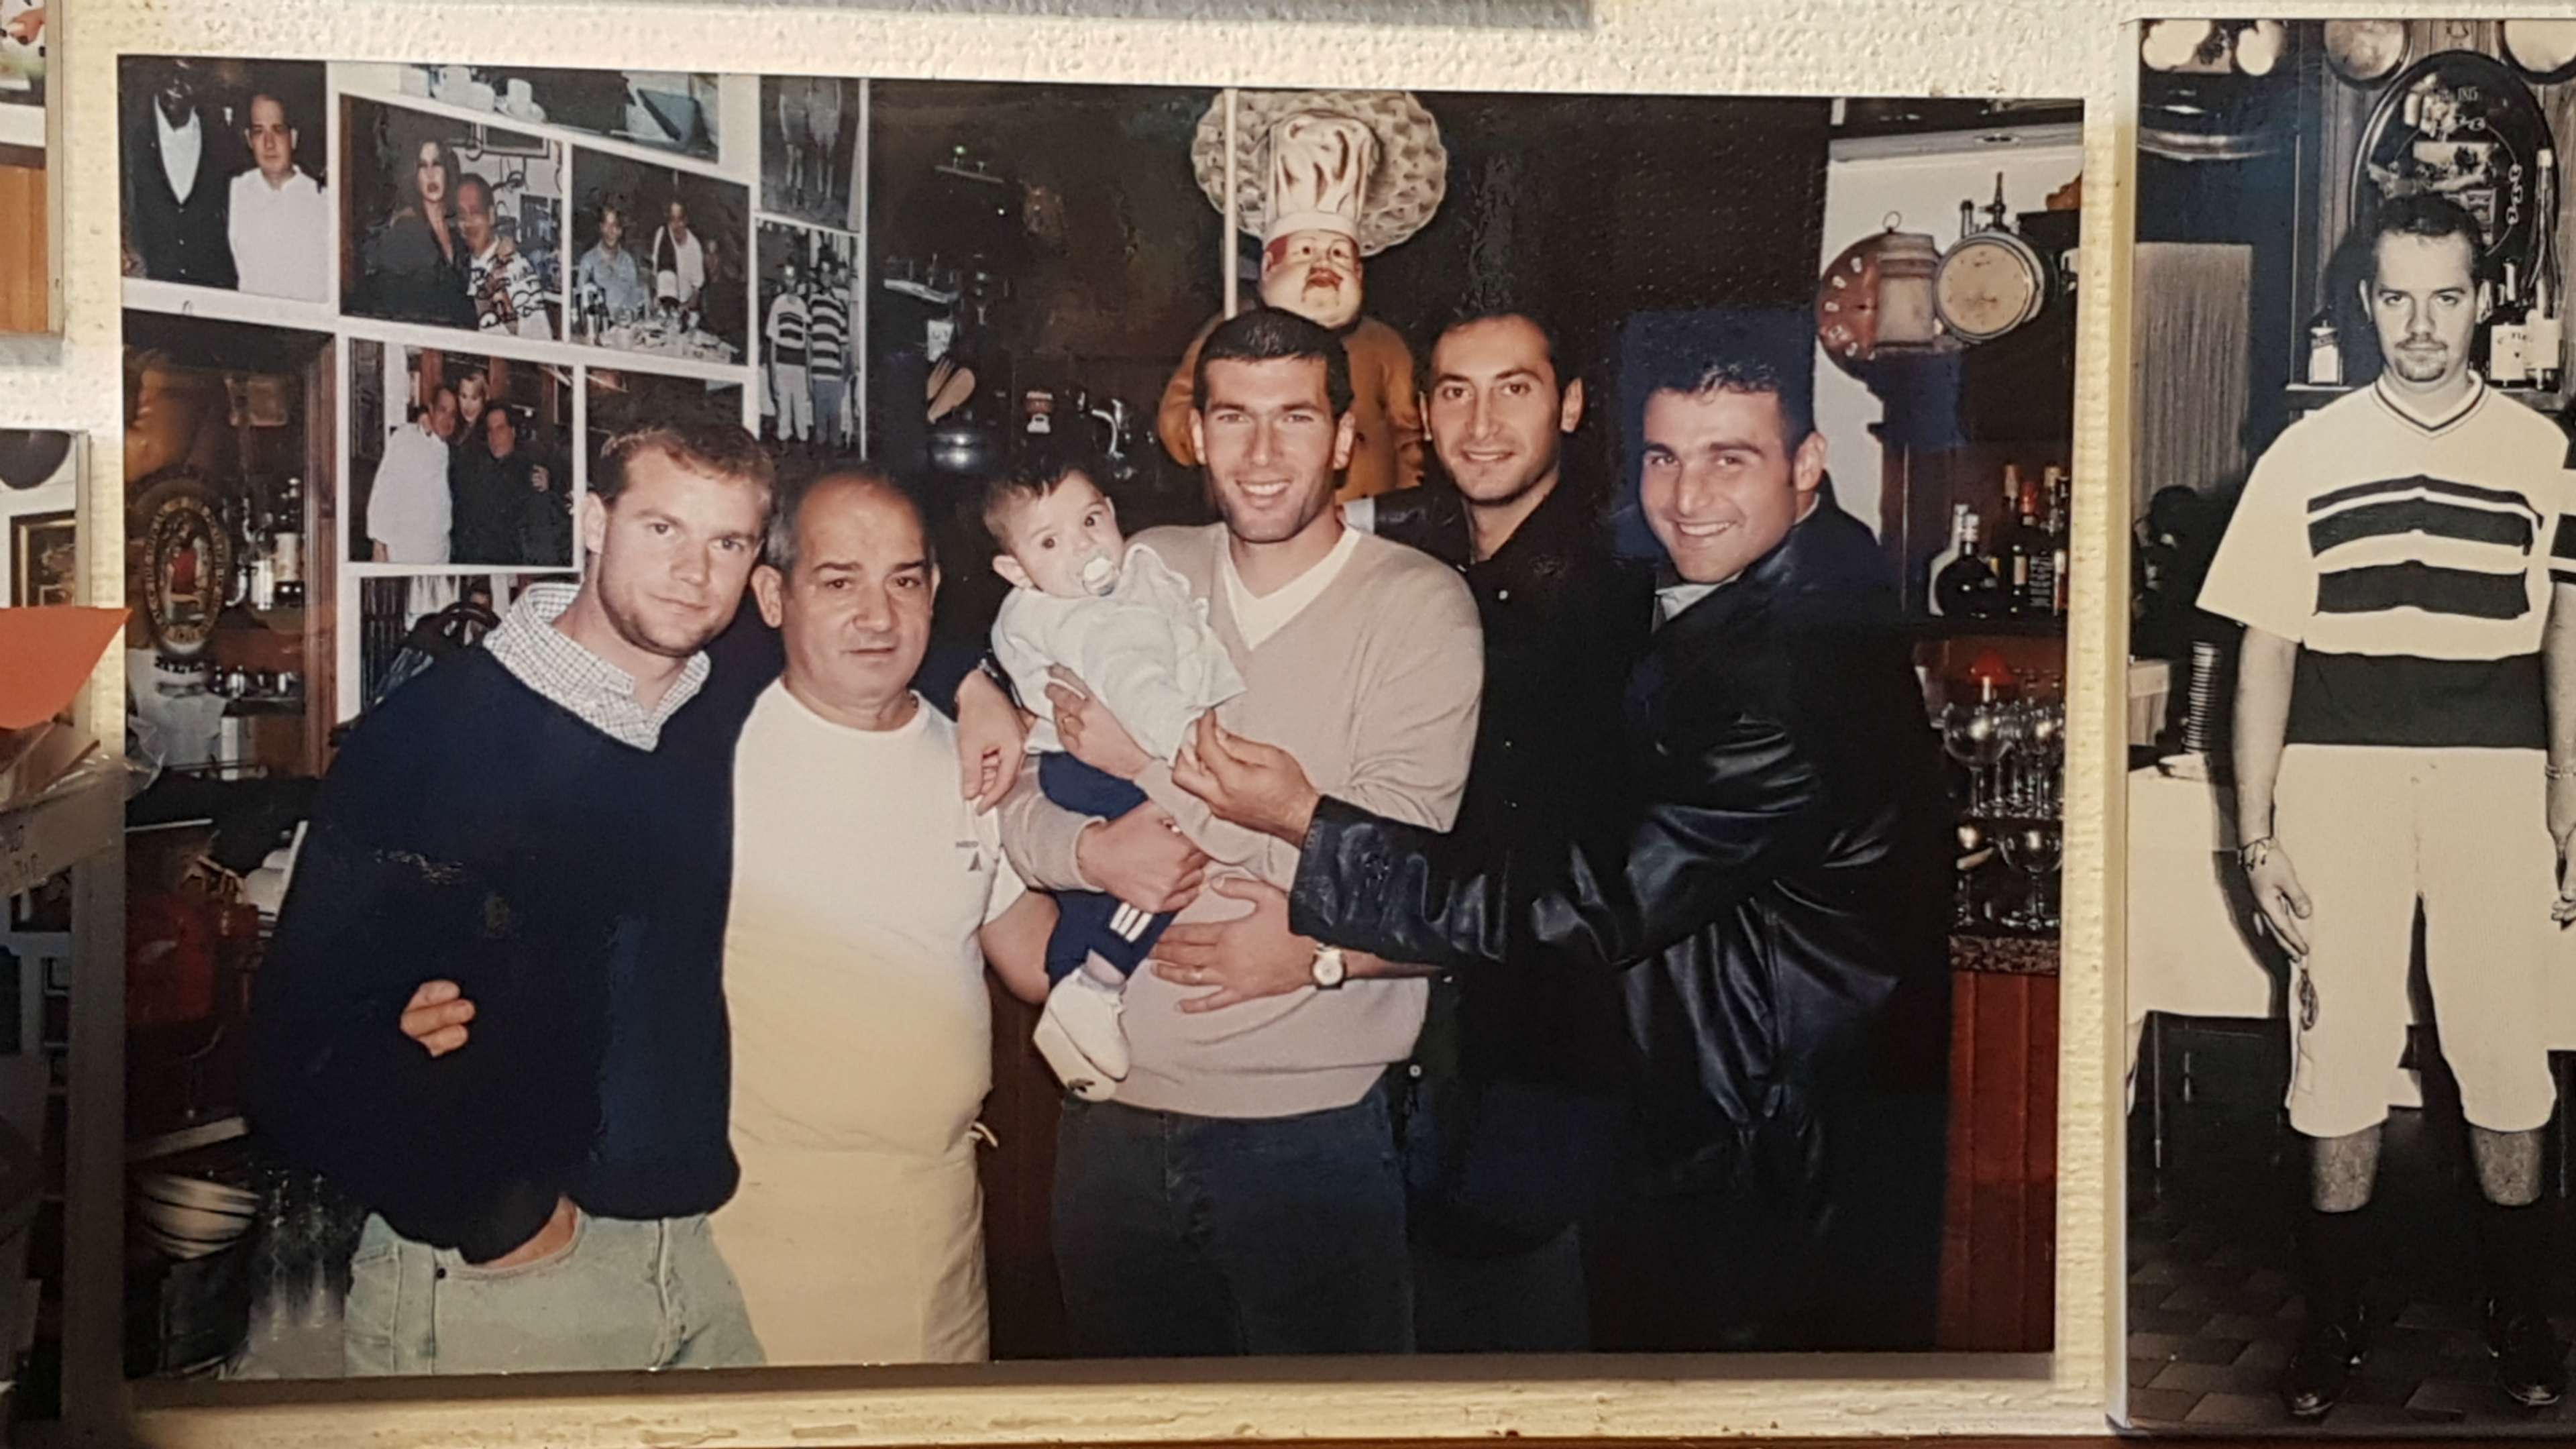 Young Zidane pic at Da Angelino restaurant in Torino